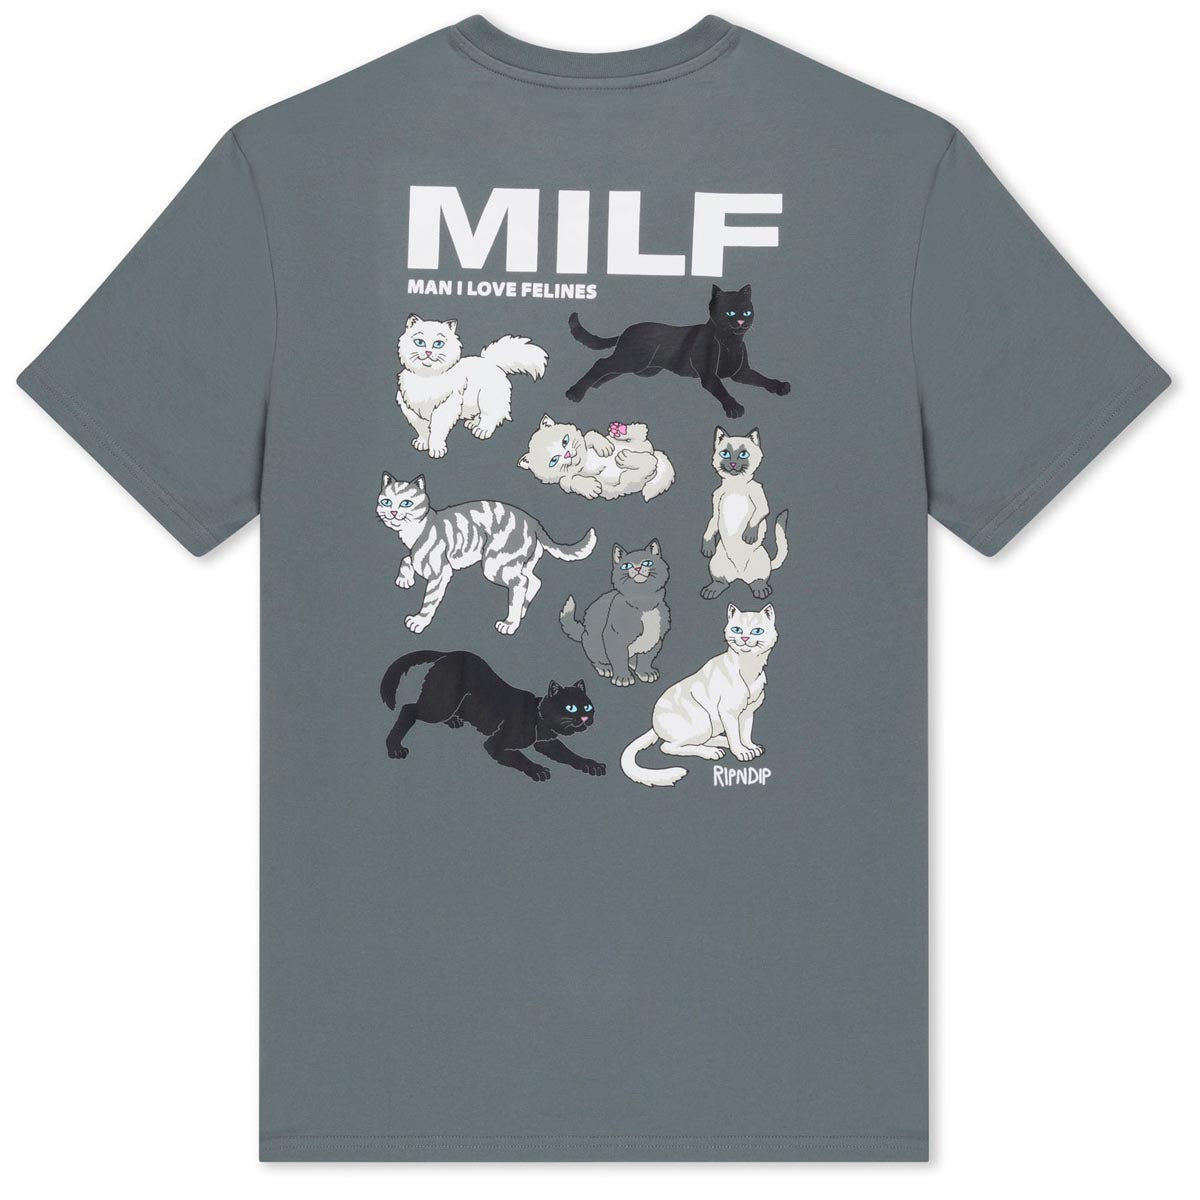 RIPNDIP Man I Love Felines T-Shirt - Charcoal image 1